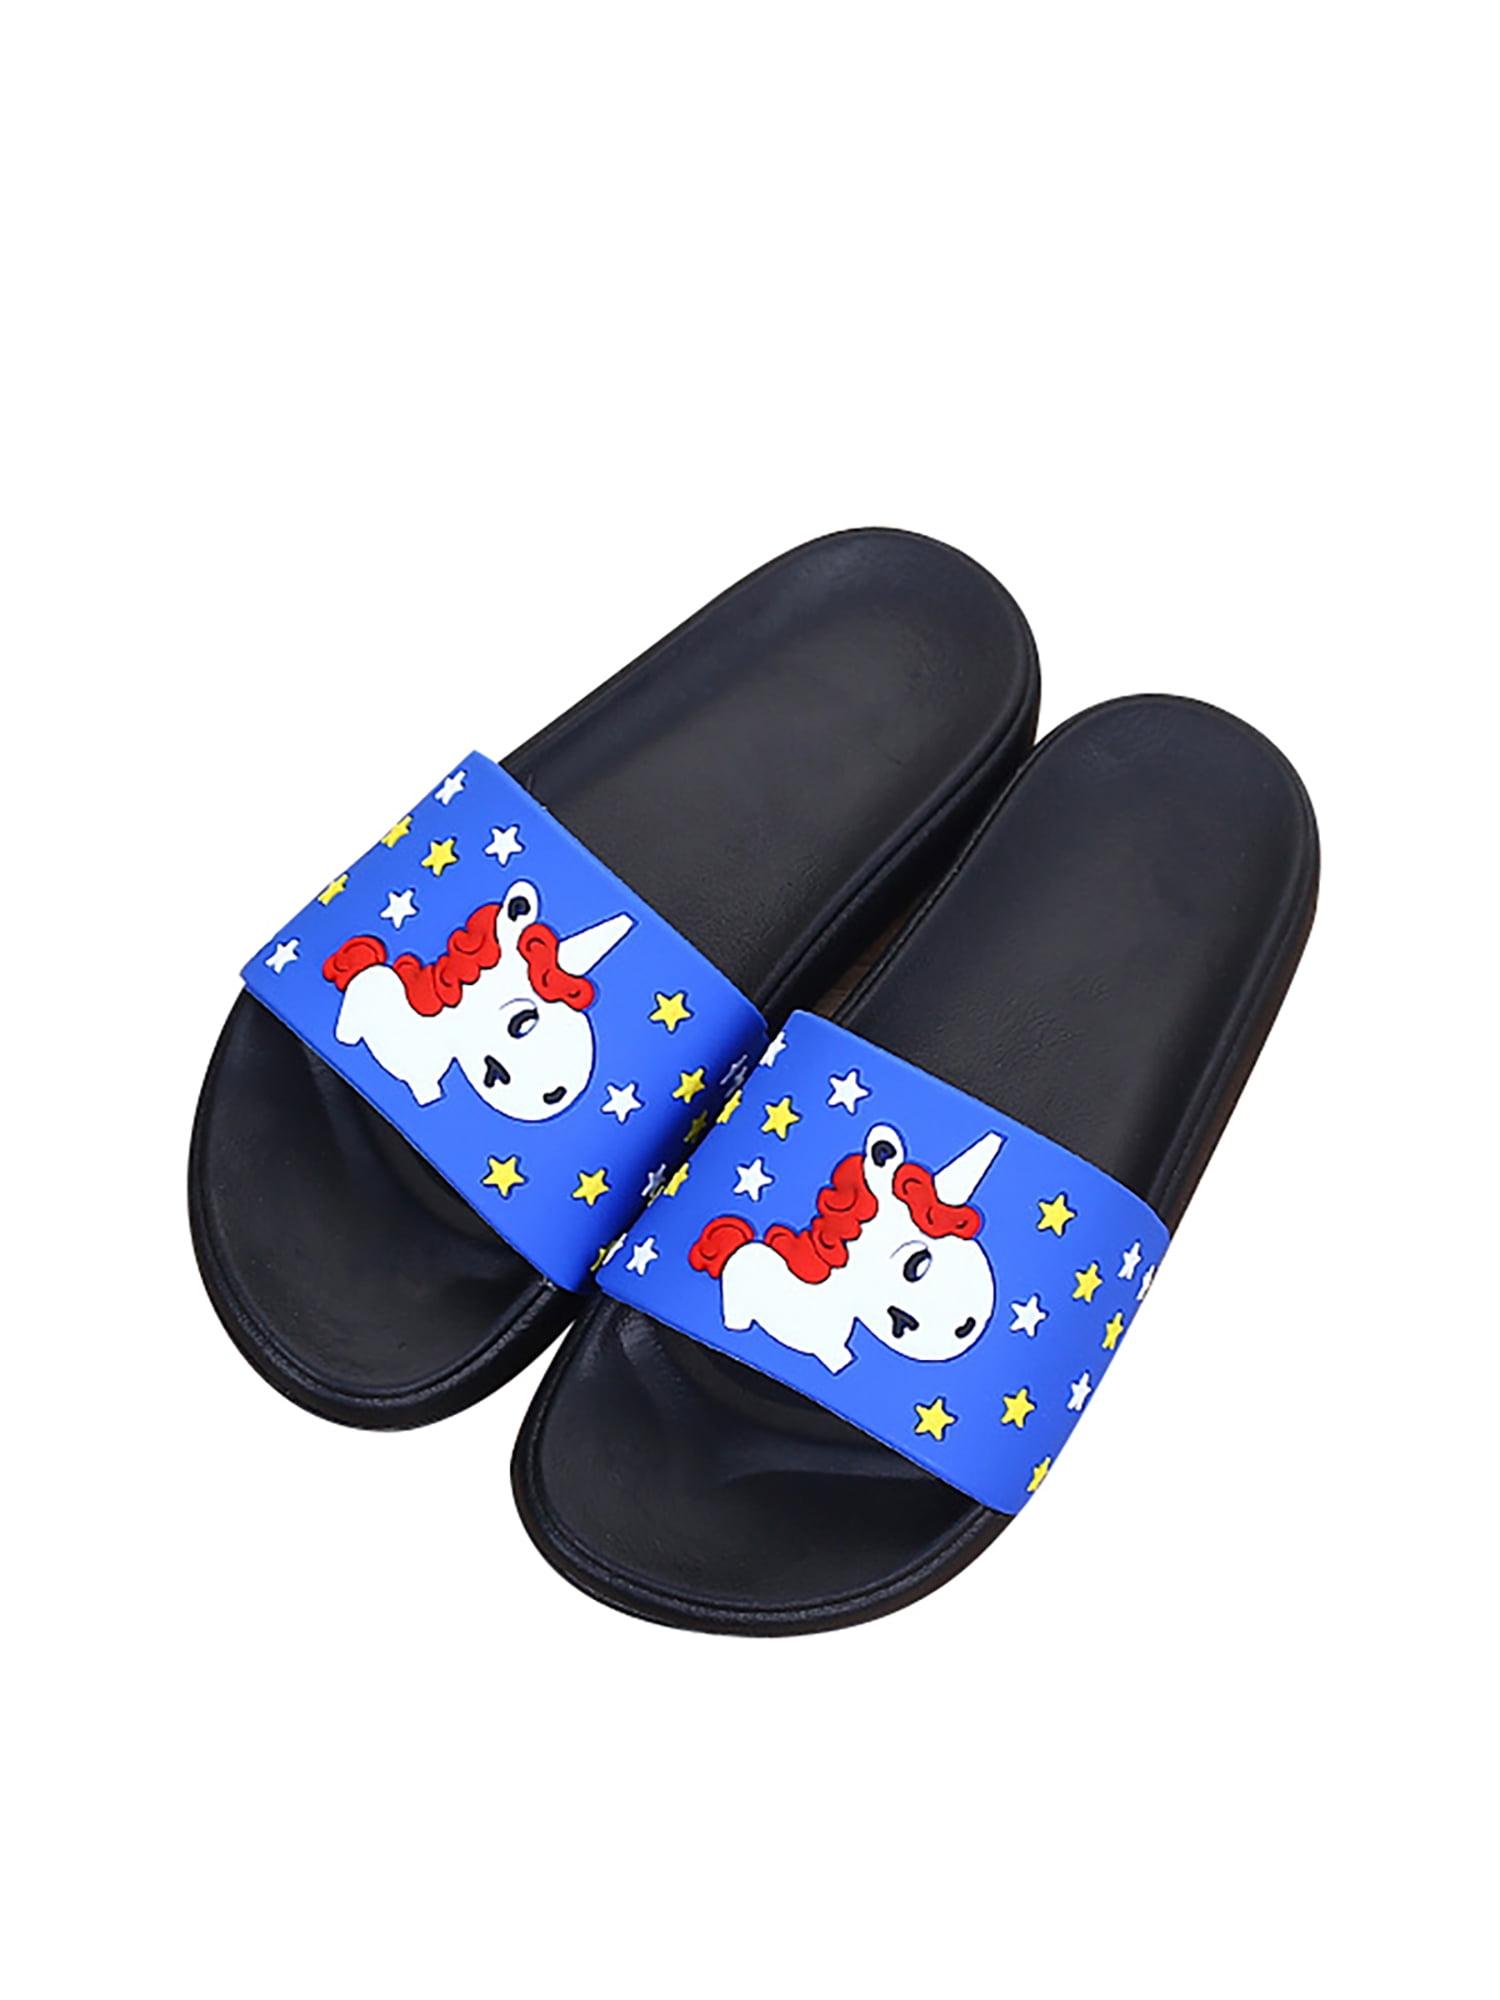 Cartoon Pizza Pattern Summer Slide Slippers For Men Women Kid Indoor Outdoor Open-Toe Beach Sandal Shoes 